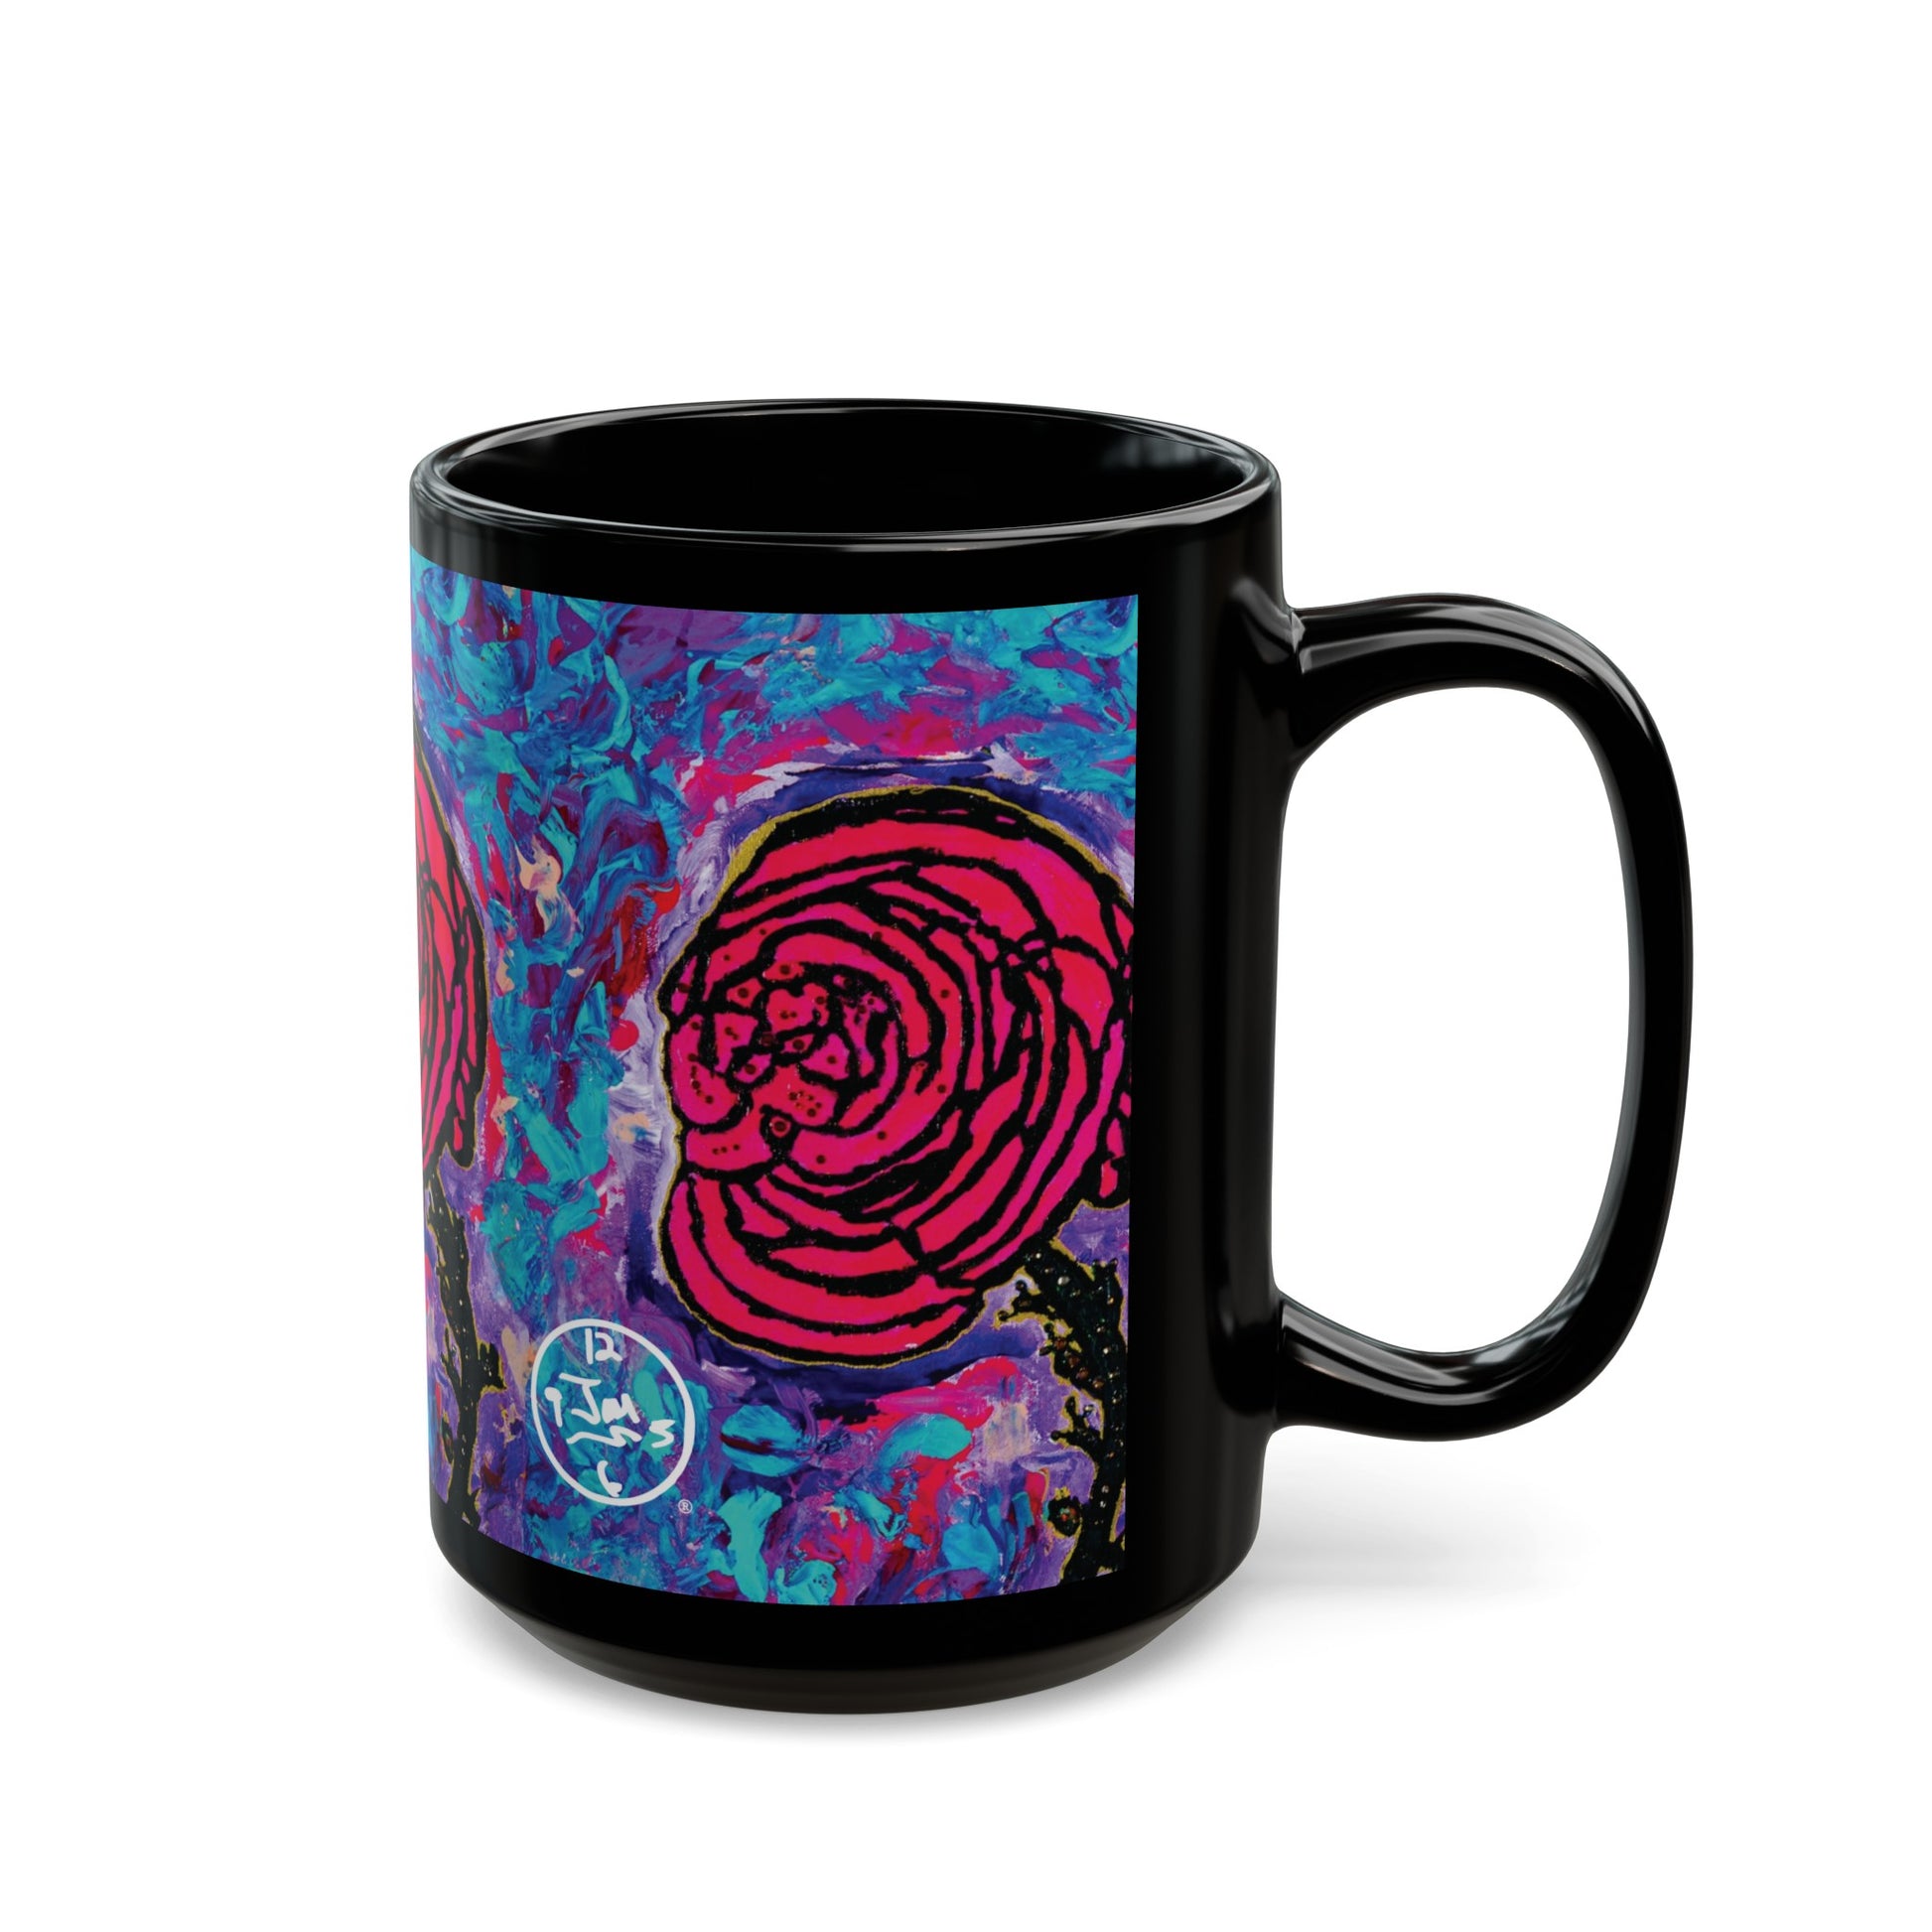 Cotton Candy Rose 15oz Black Mug by Jumper Maybach® - Jumper Maybach